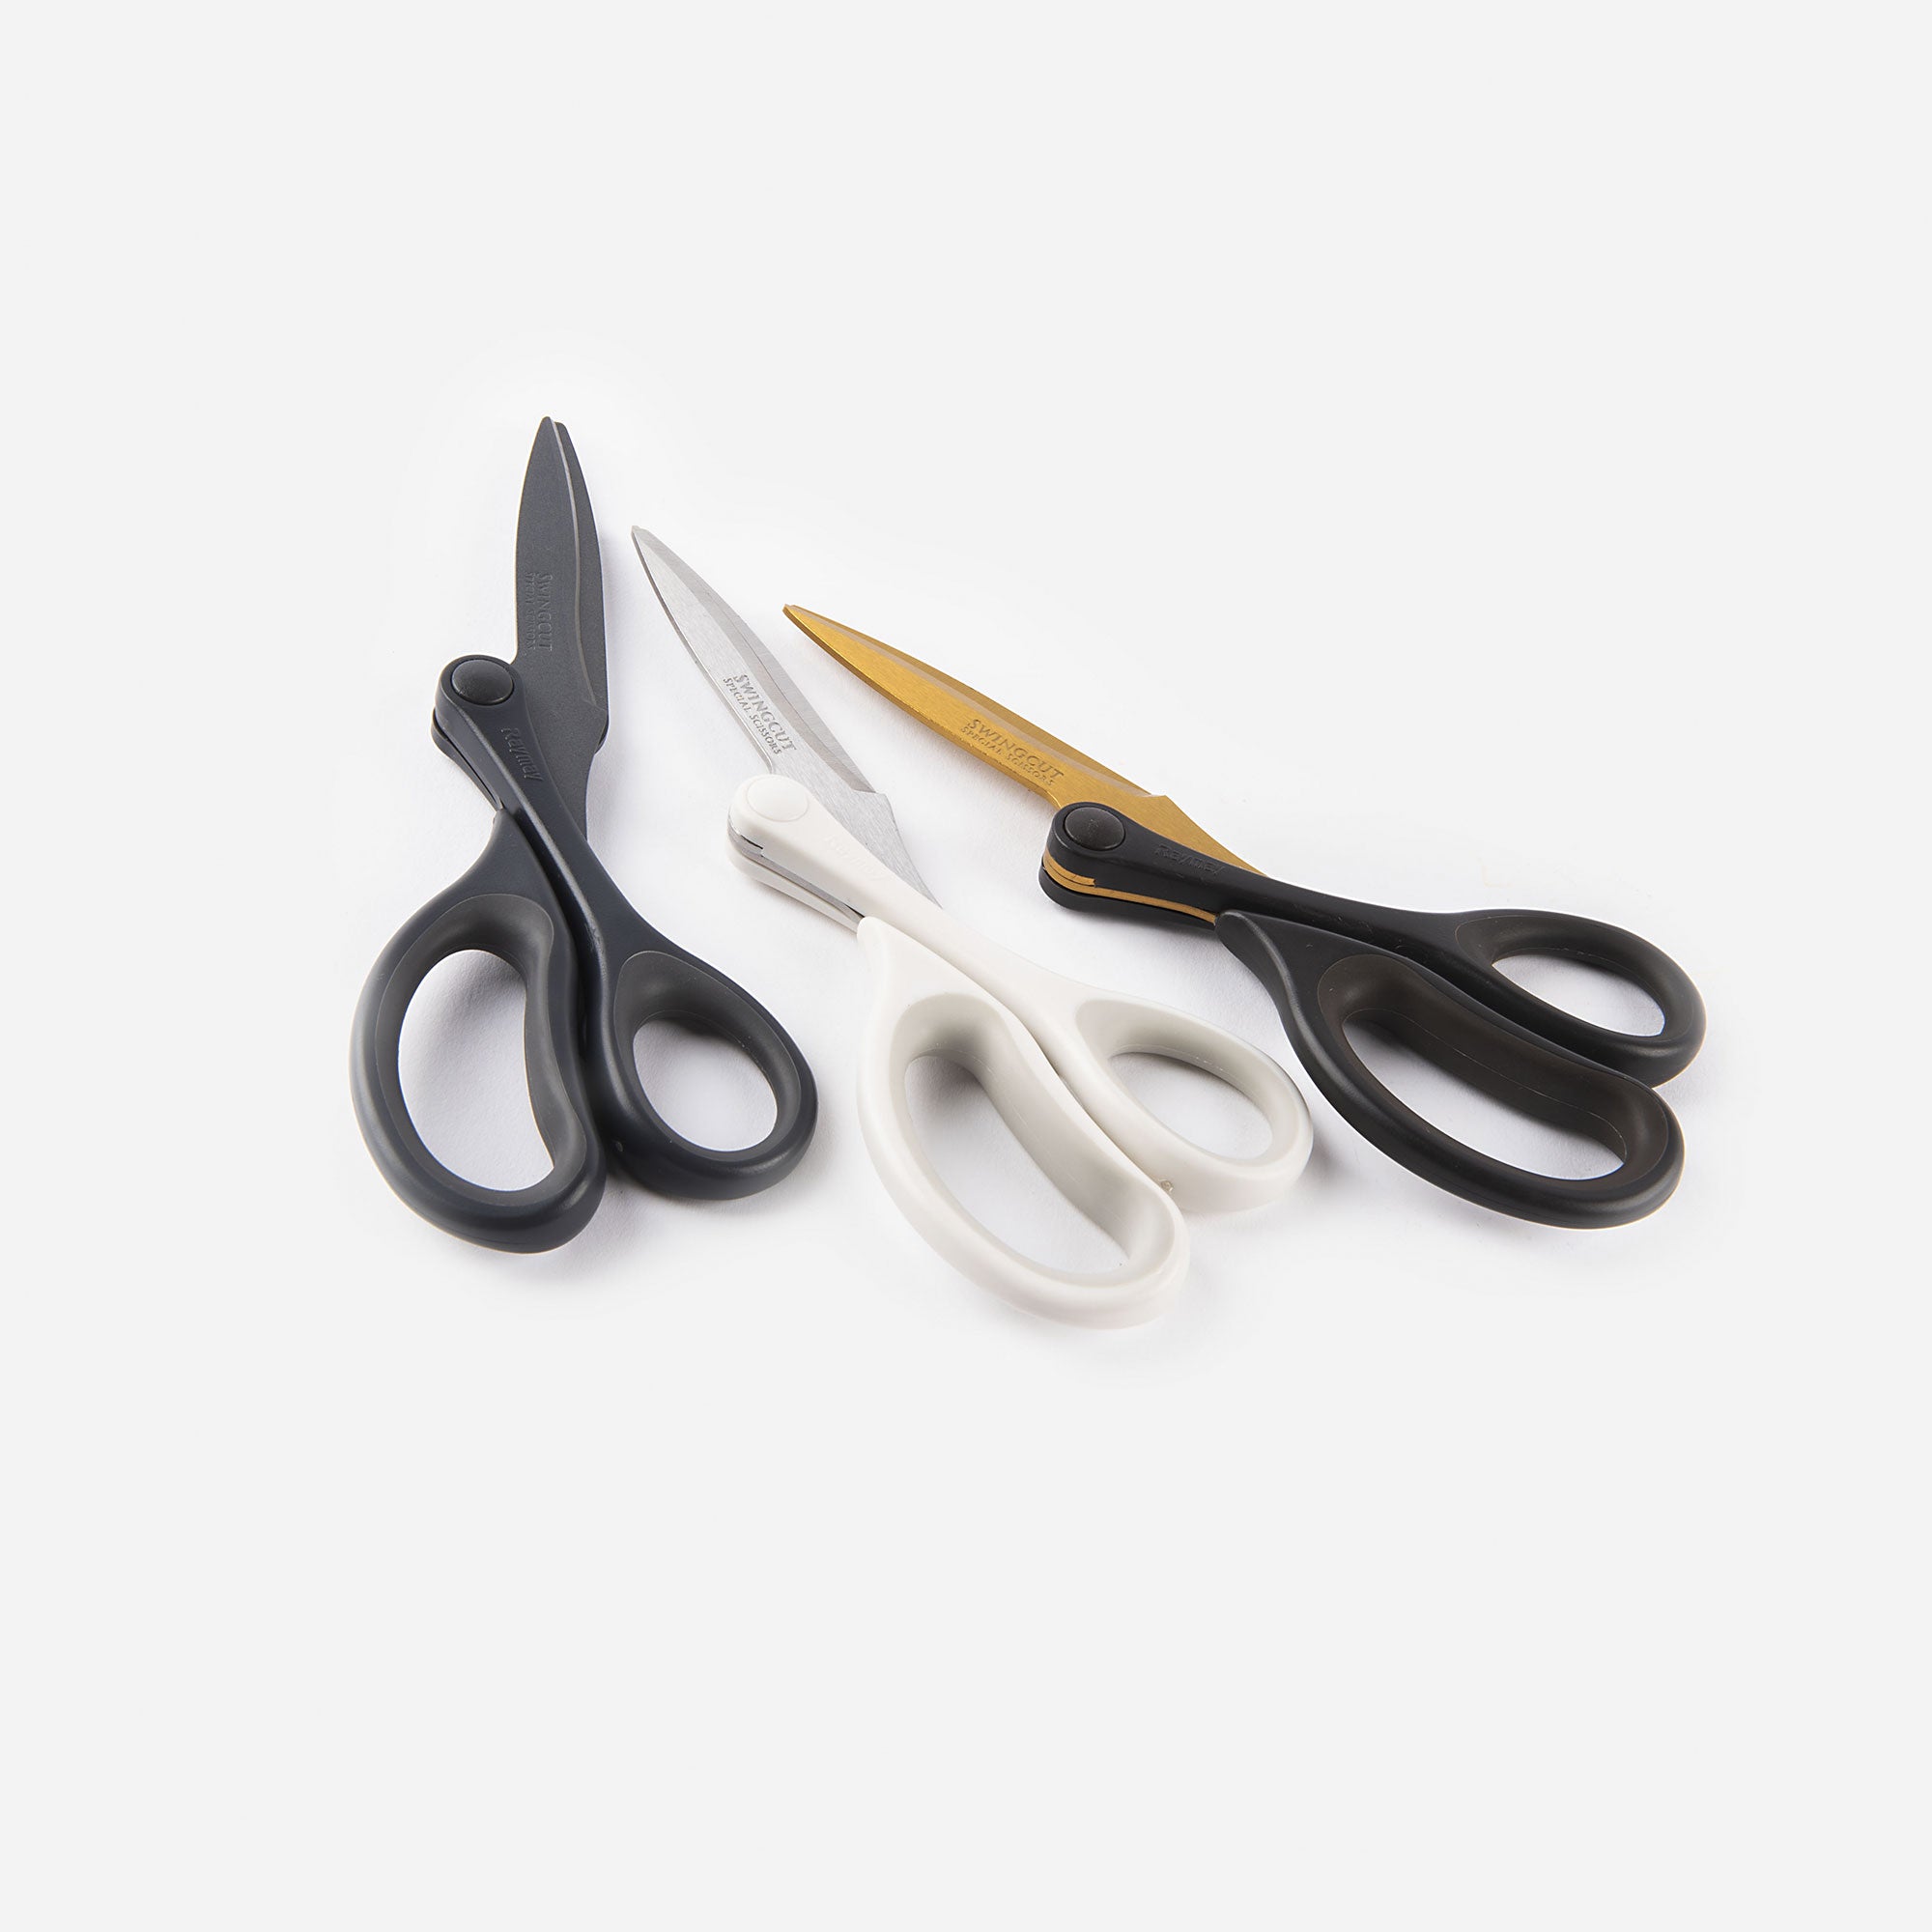 Swingcut scissors